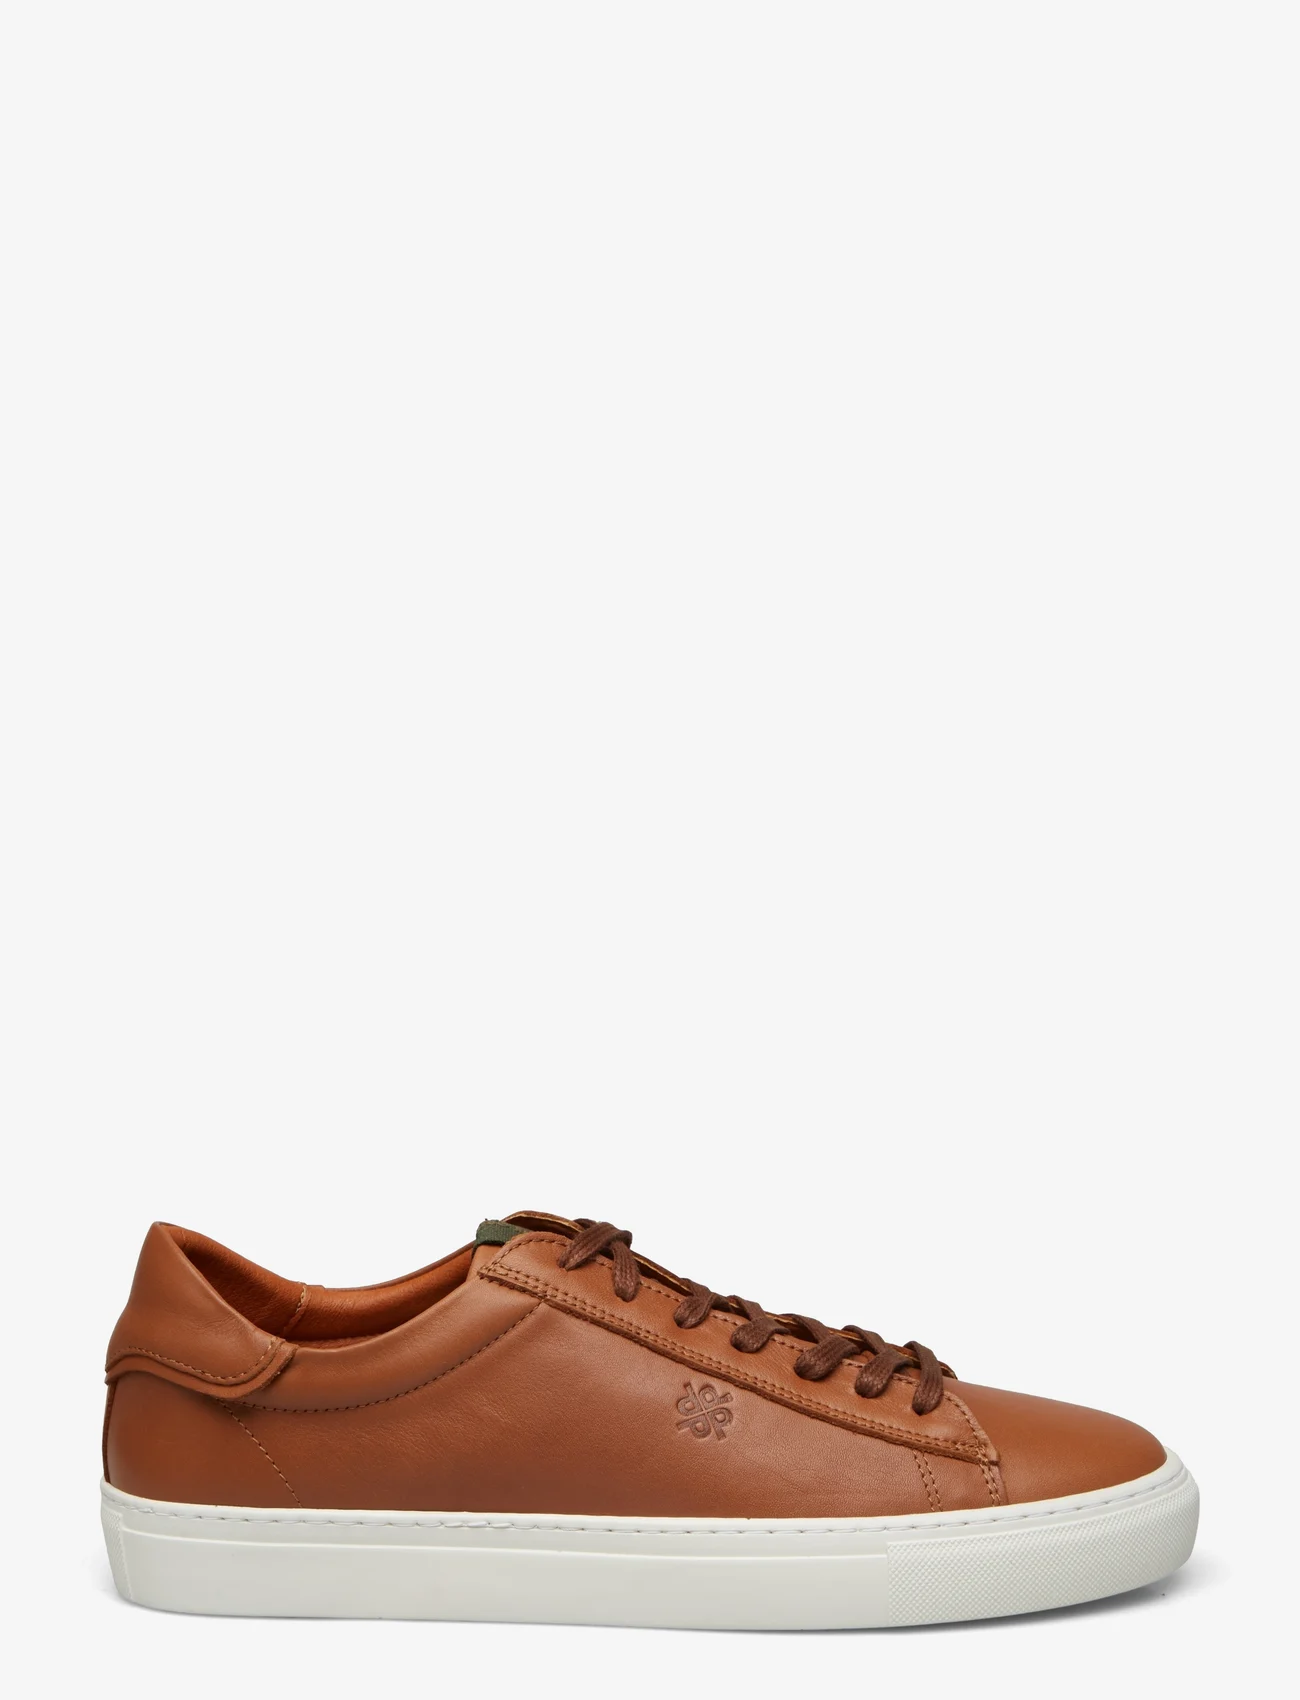 Playboy Footwear - Henri - niedriger schnitt - brown leather - 1